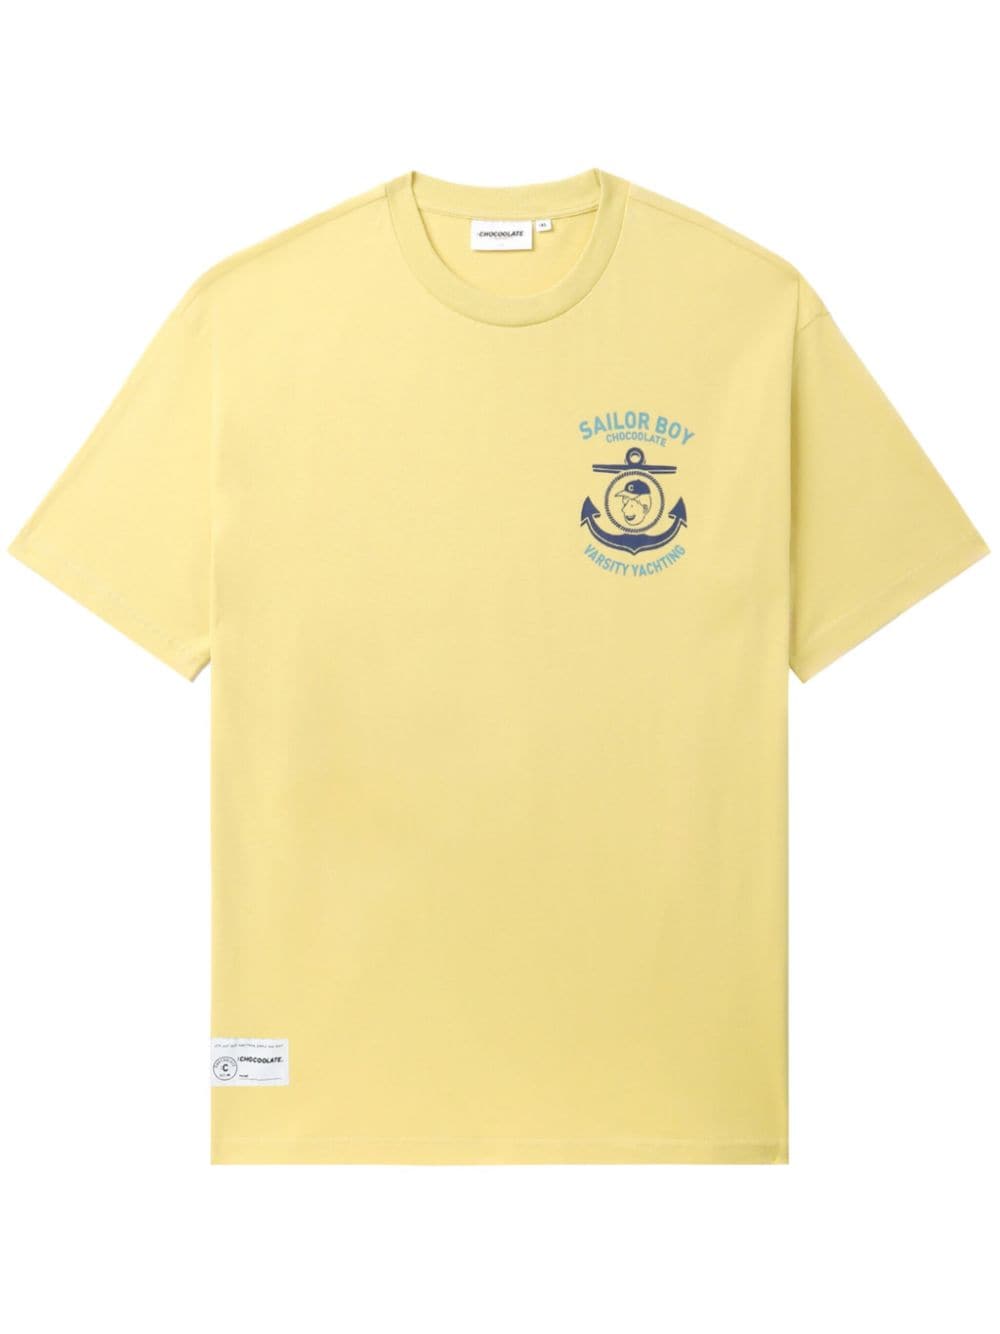 CHOCOOLATE anchor-print cotton T-shirt - Yellow